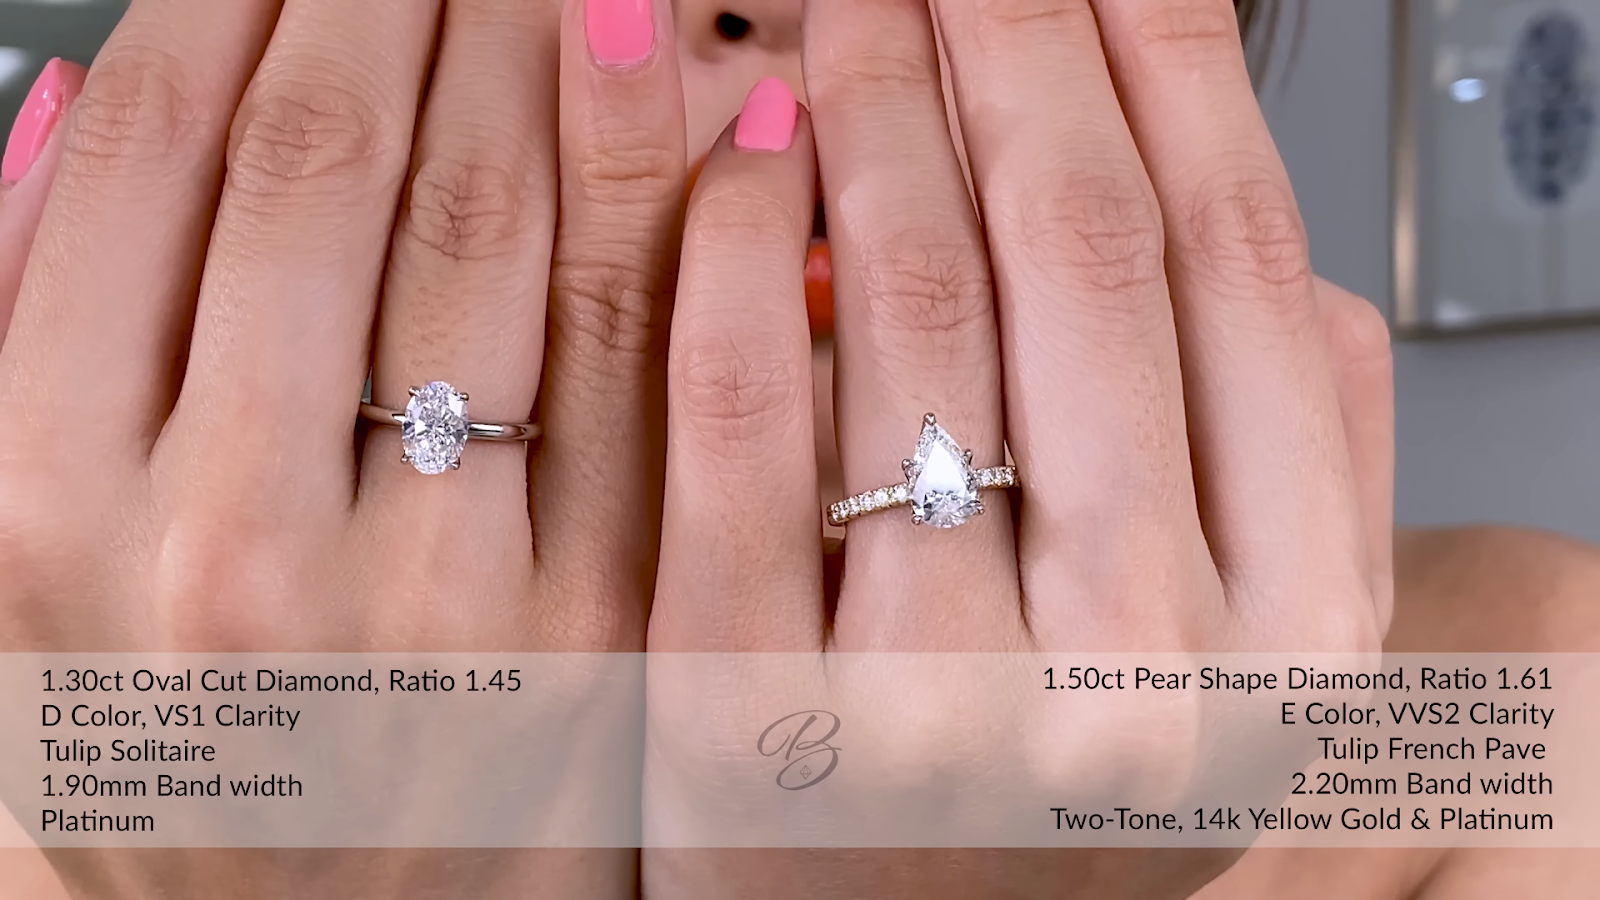 Oval Cut Diamond Ring Vs. Pear Shape Diamond Ring